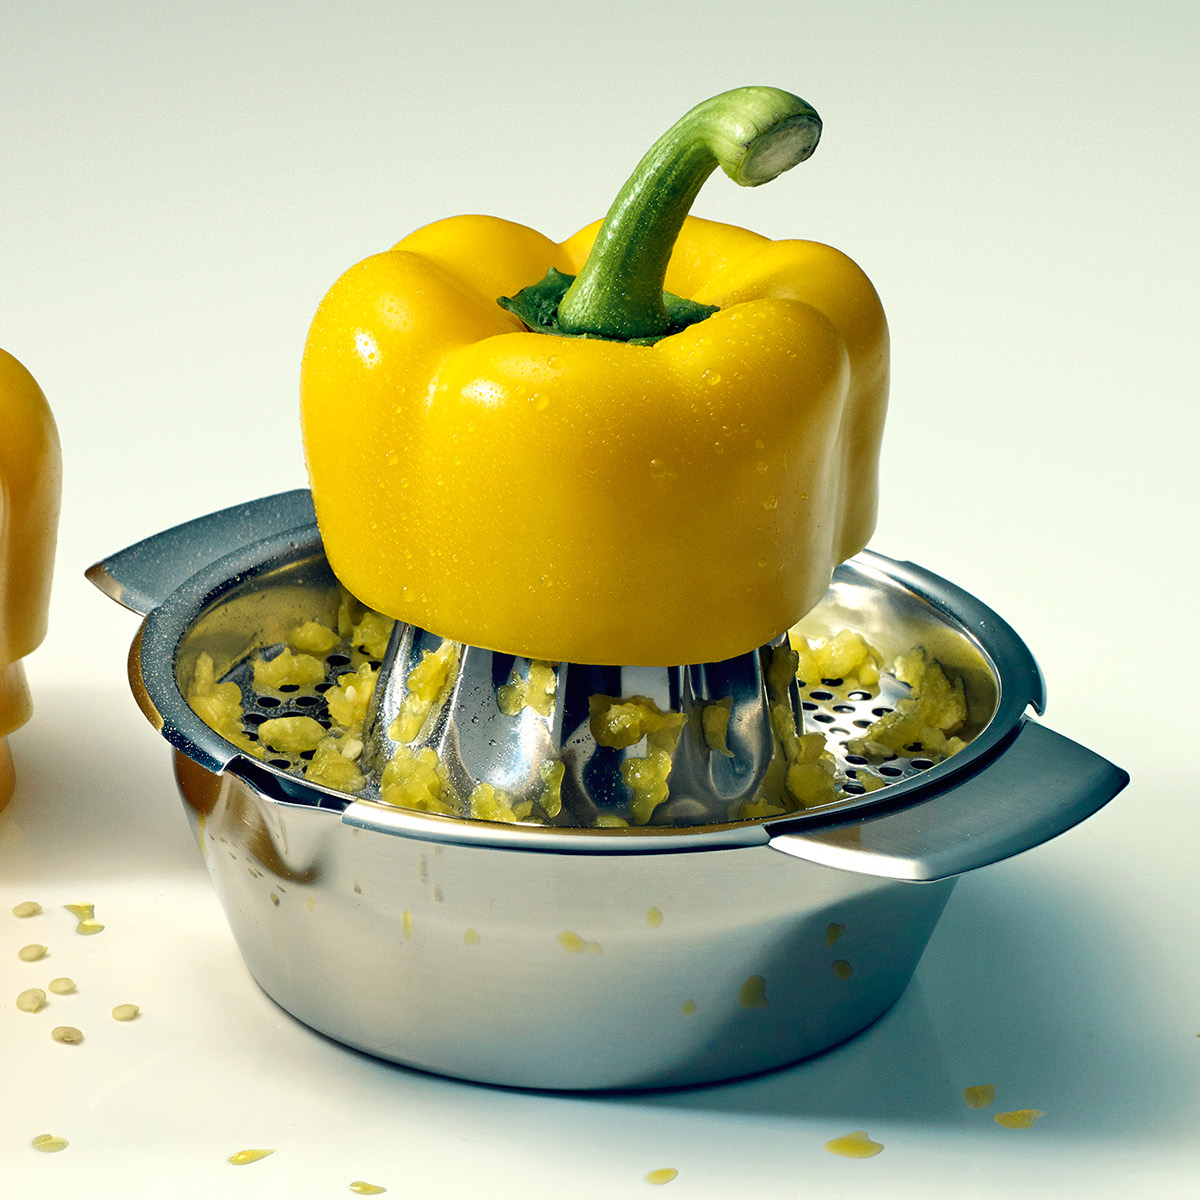 Souverein CGI 3D postproduction havas Edo Kars Lloyds Pharmacy vegetables Fruit vitamines 水果 蔬菜 овощи luminous creative imaging